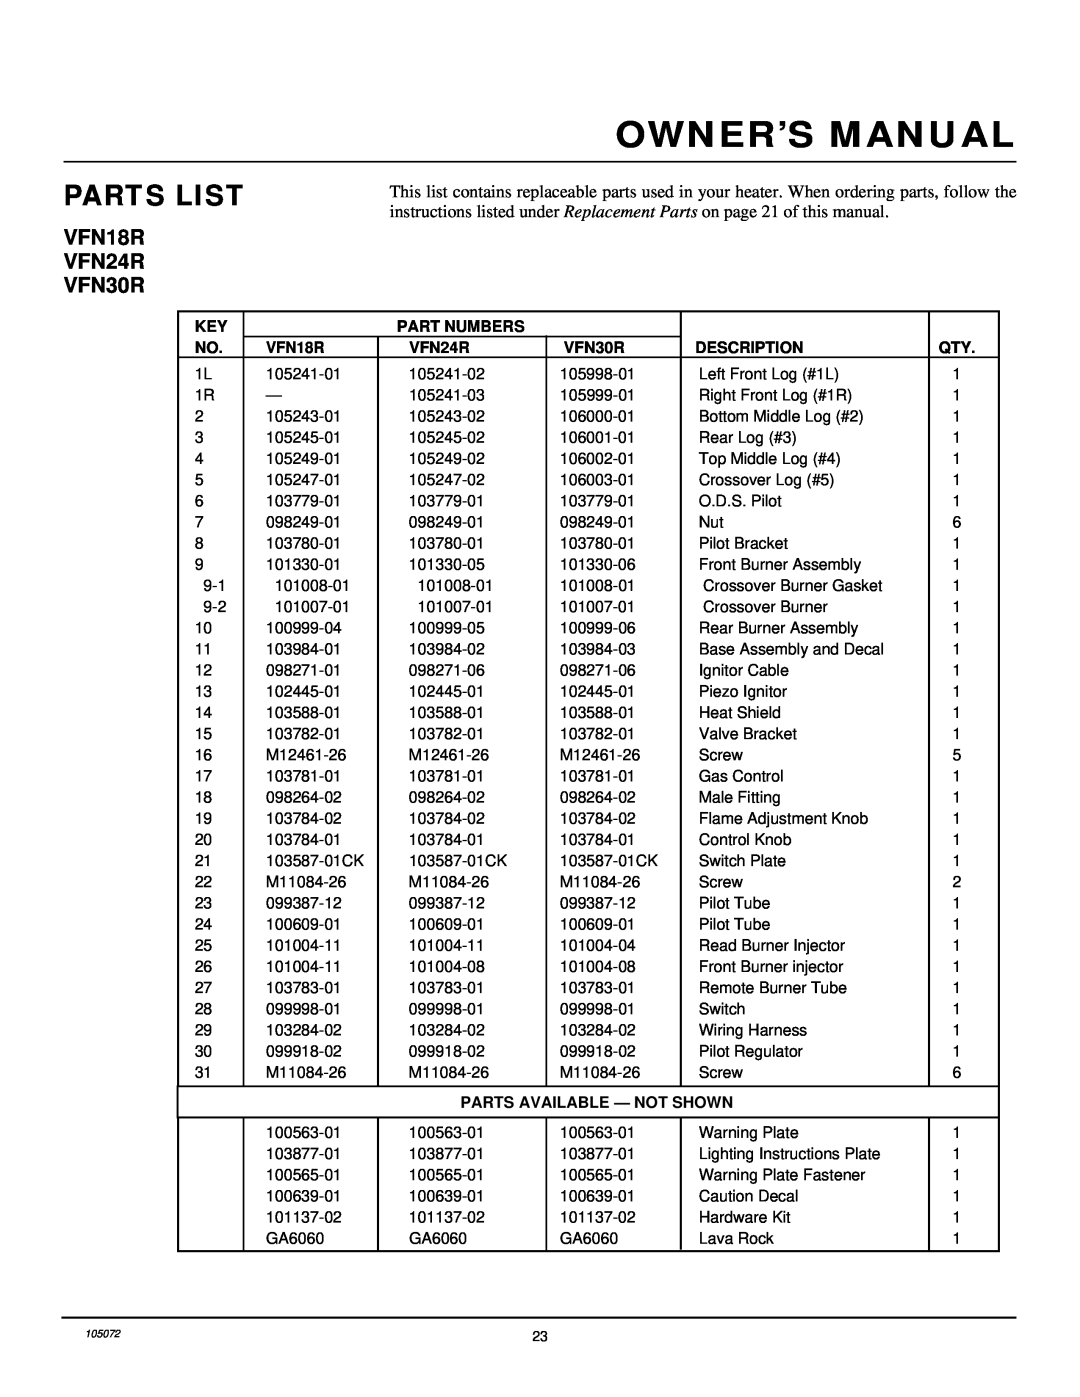 Desa VFN18R installation manual Parts List, Part Numbers, VFN24R, VFN30R, Description, Parts Available - Not Shown 